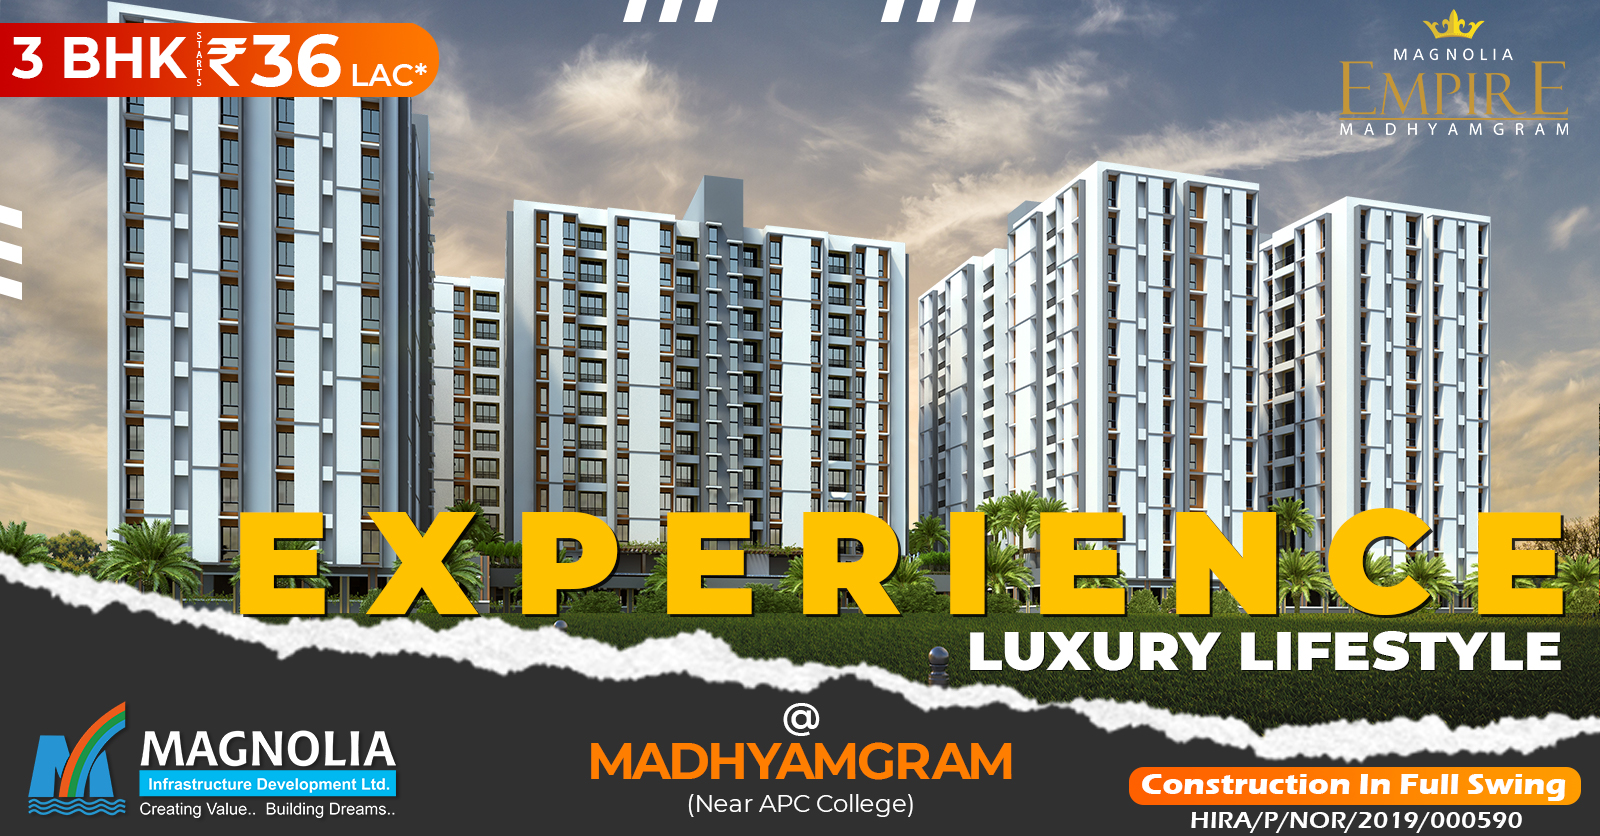 Magnolia Empire Madhyamgram fastest growing residential location in Kolkata